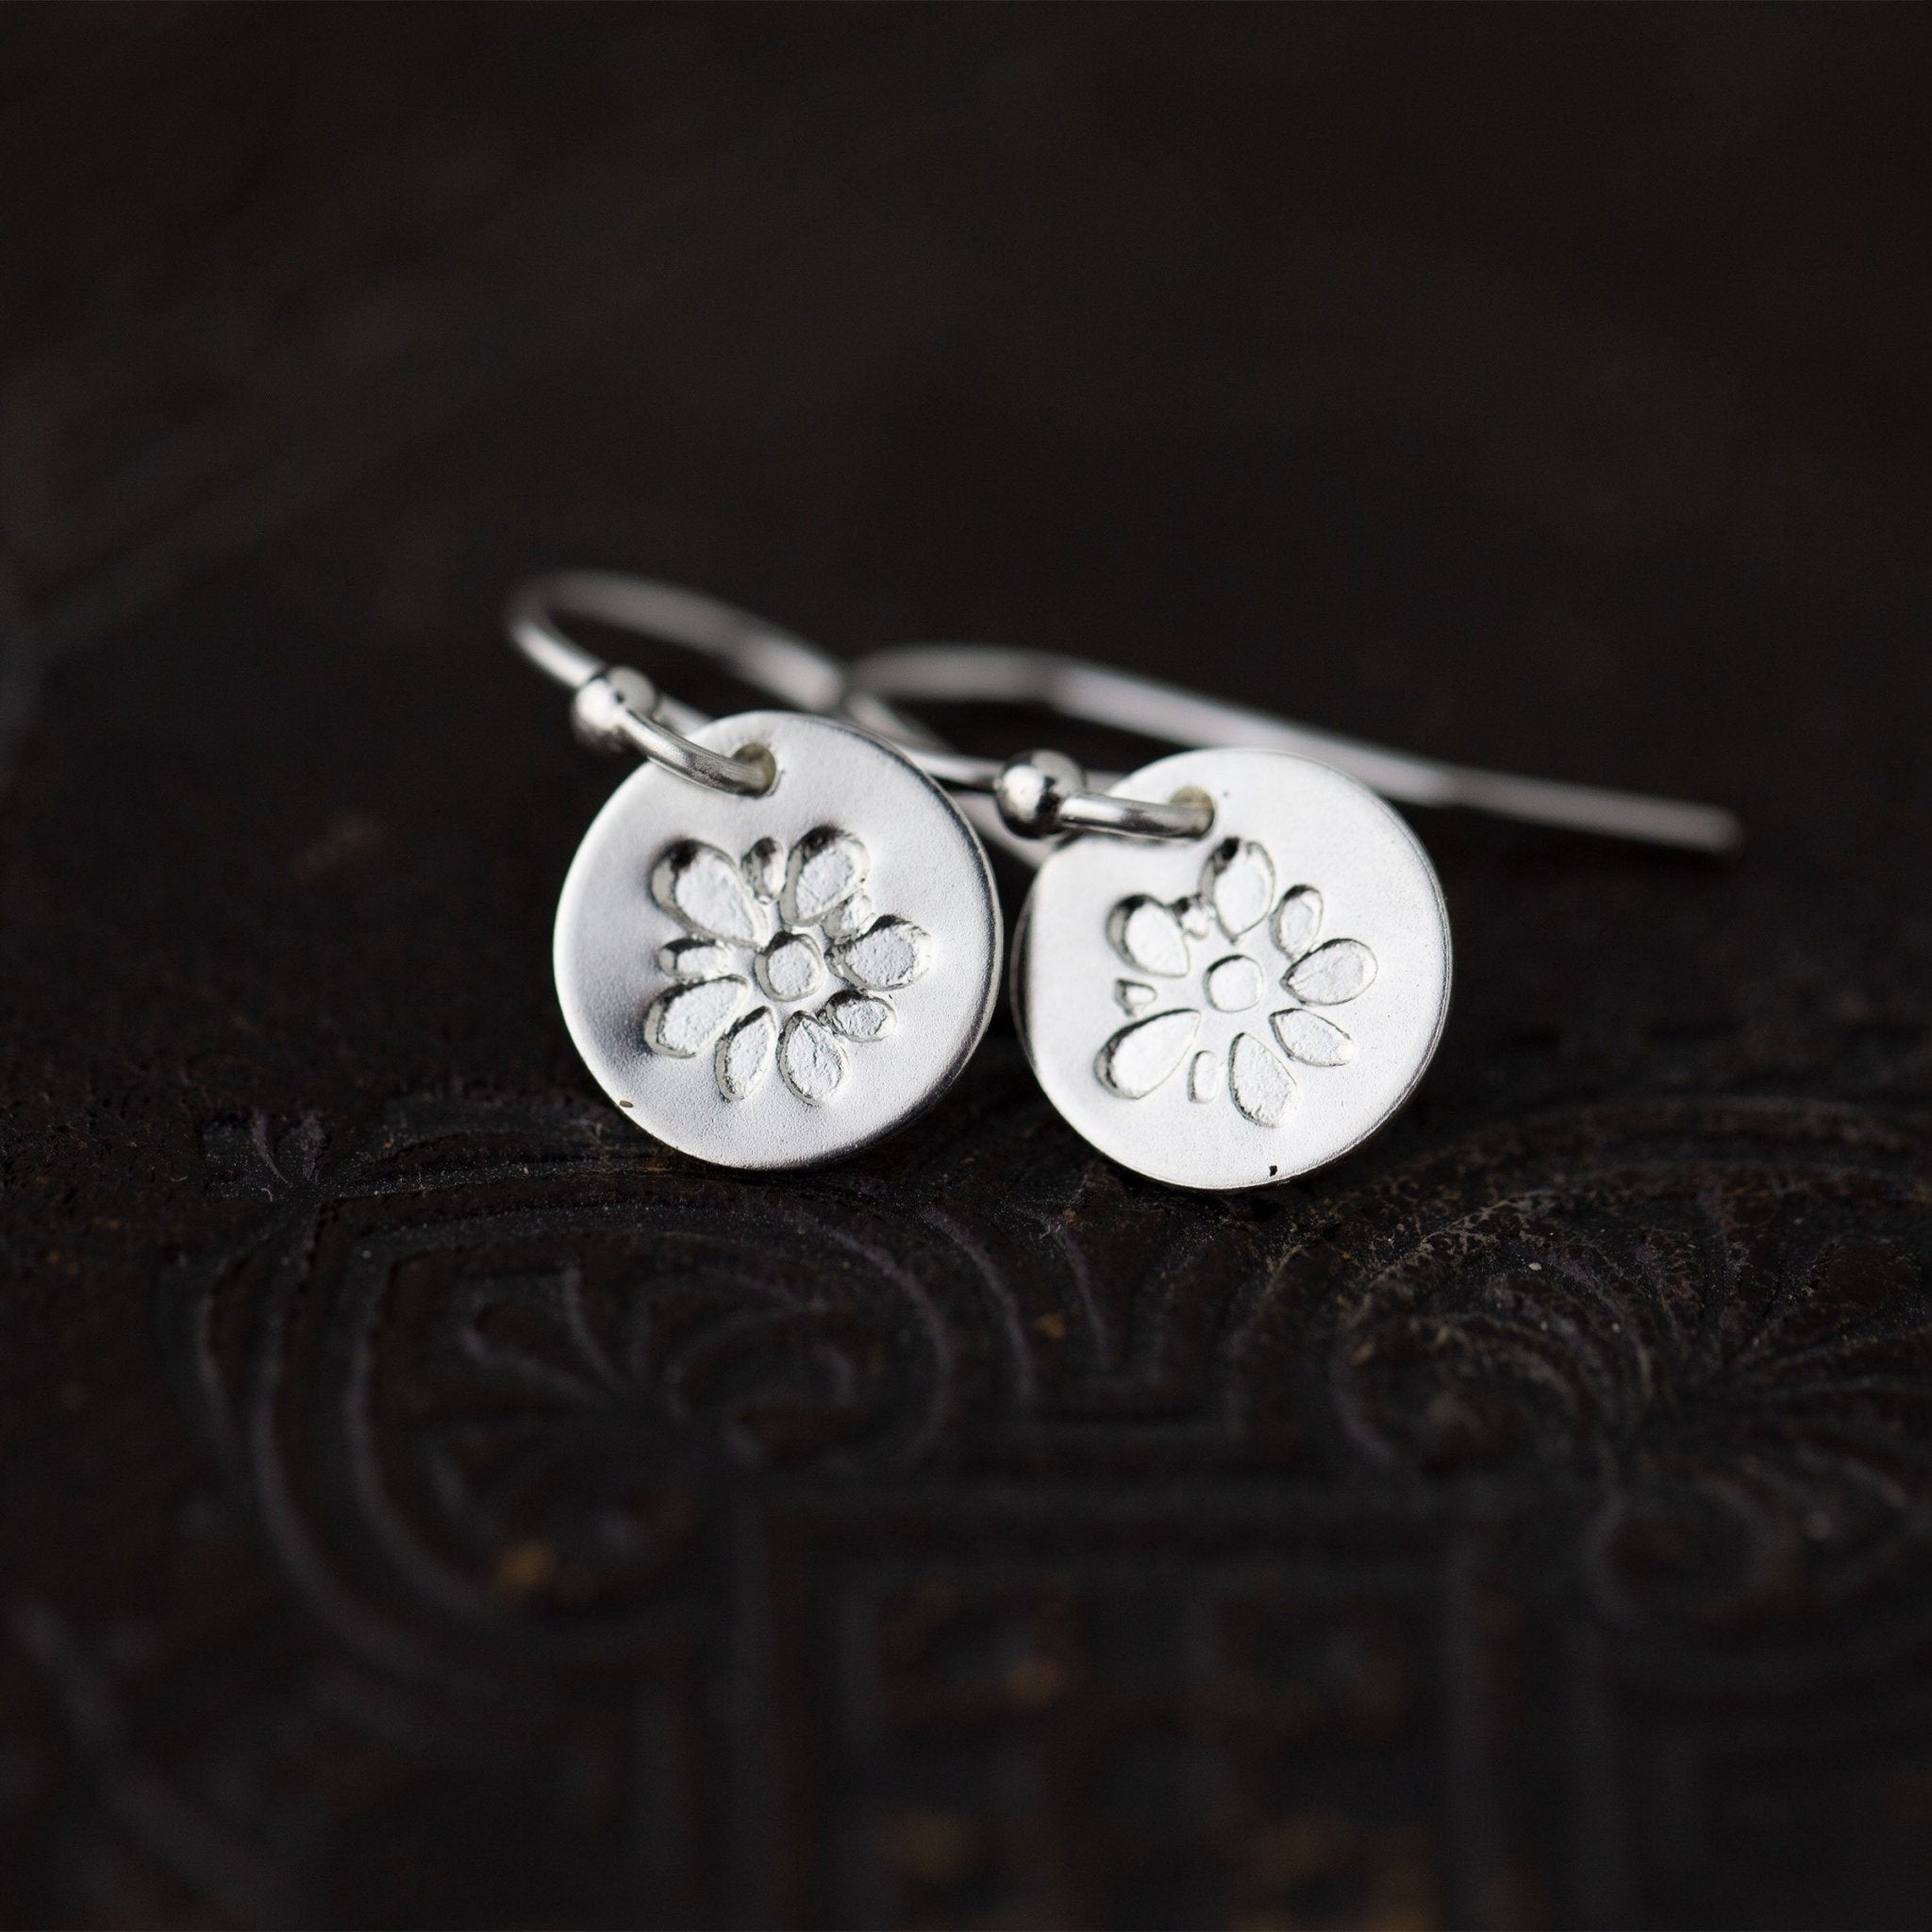 Mini Stamped Flower Earrings - Handmade Jewelry by Burnish